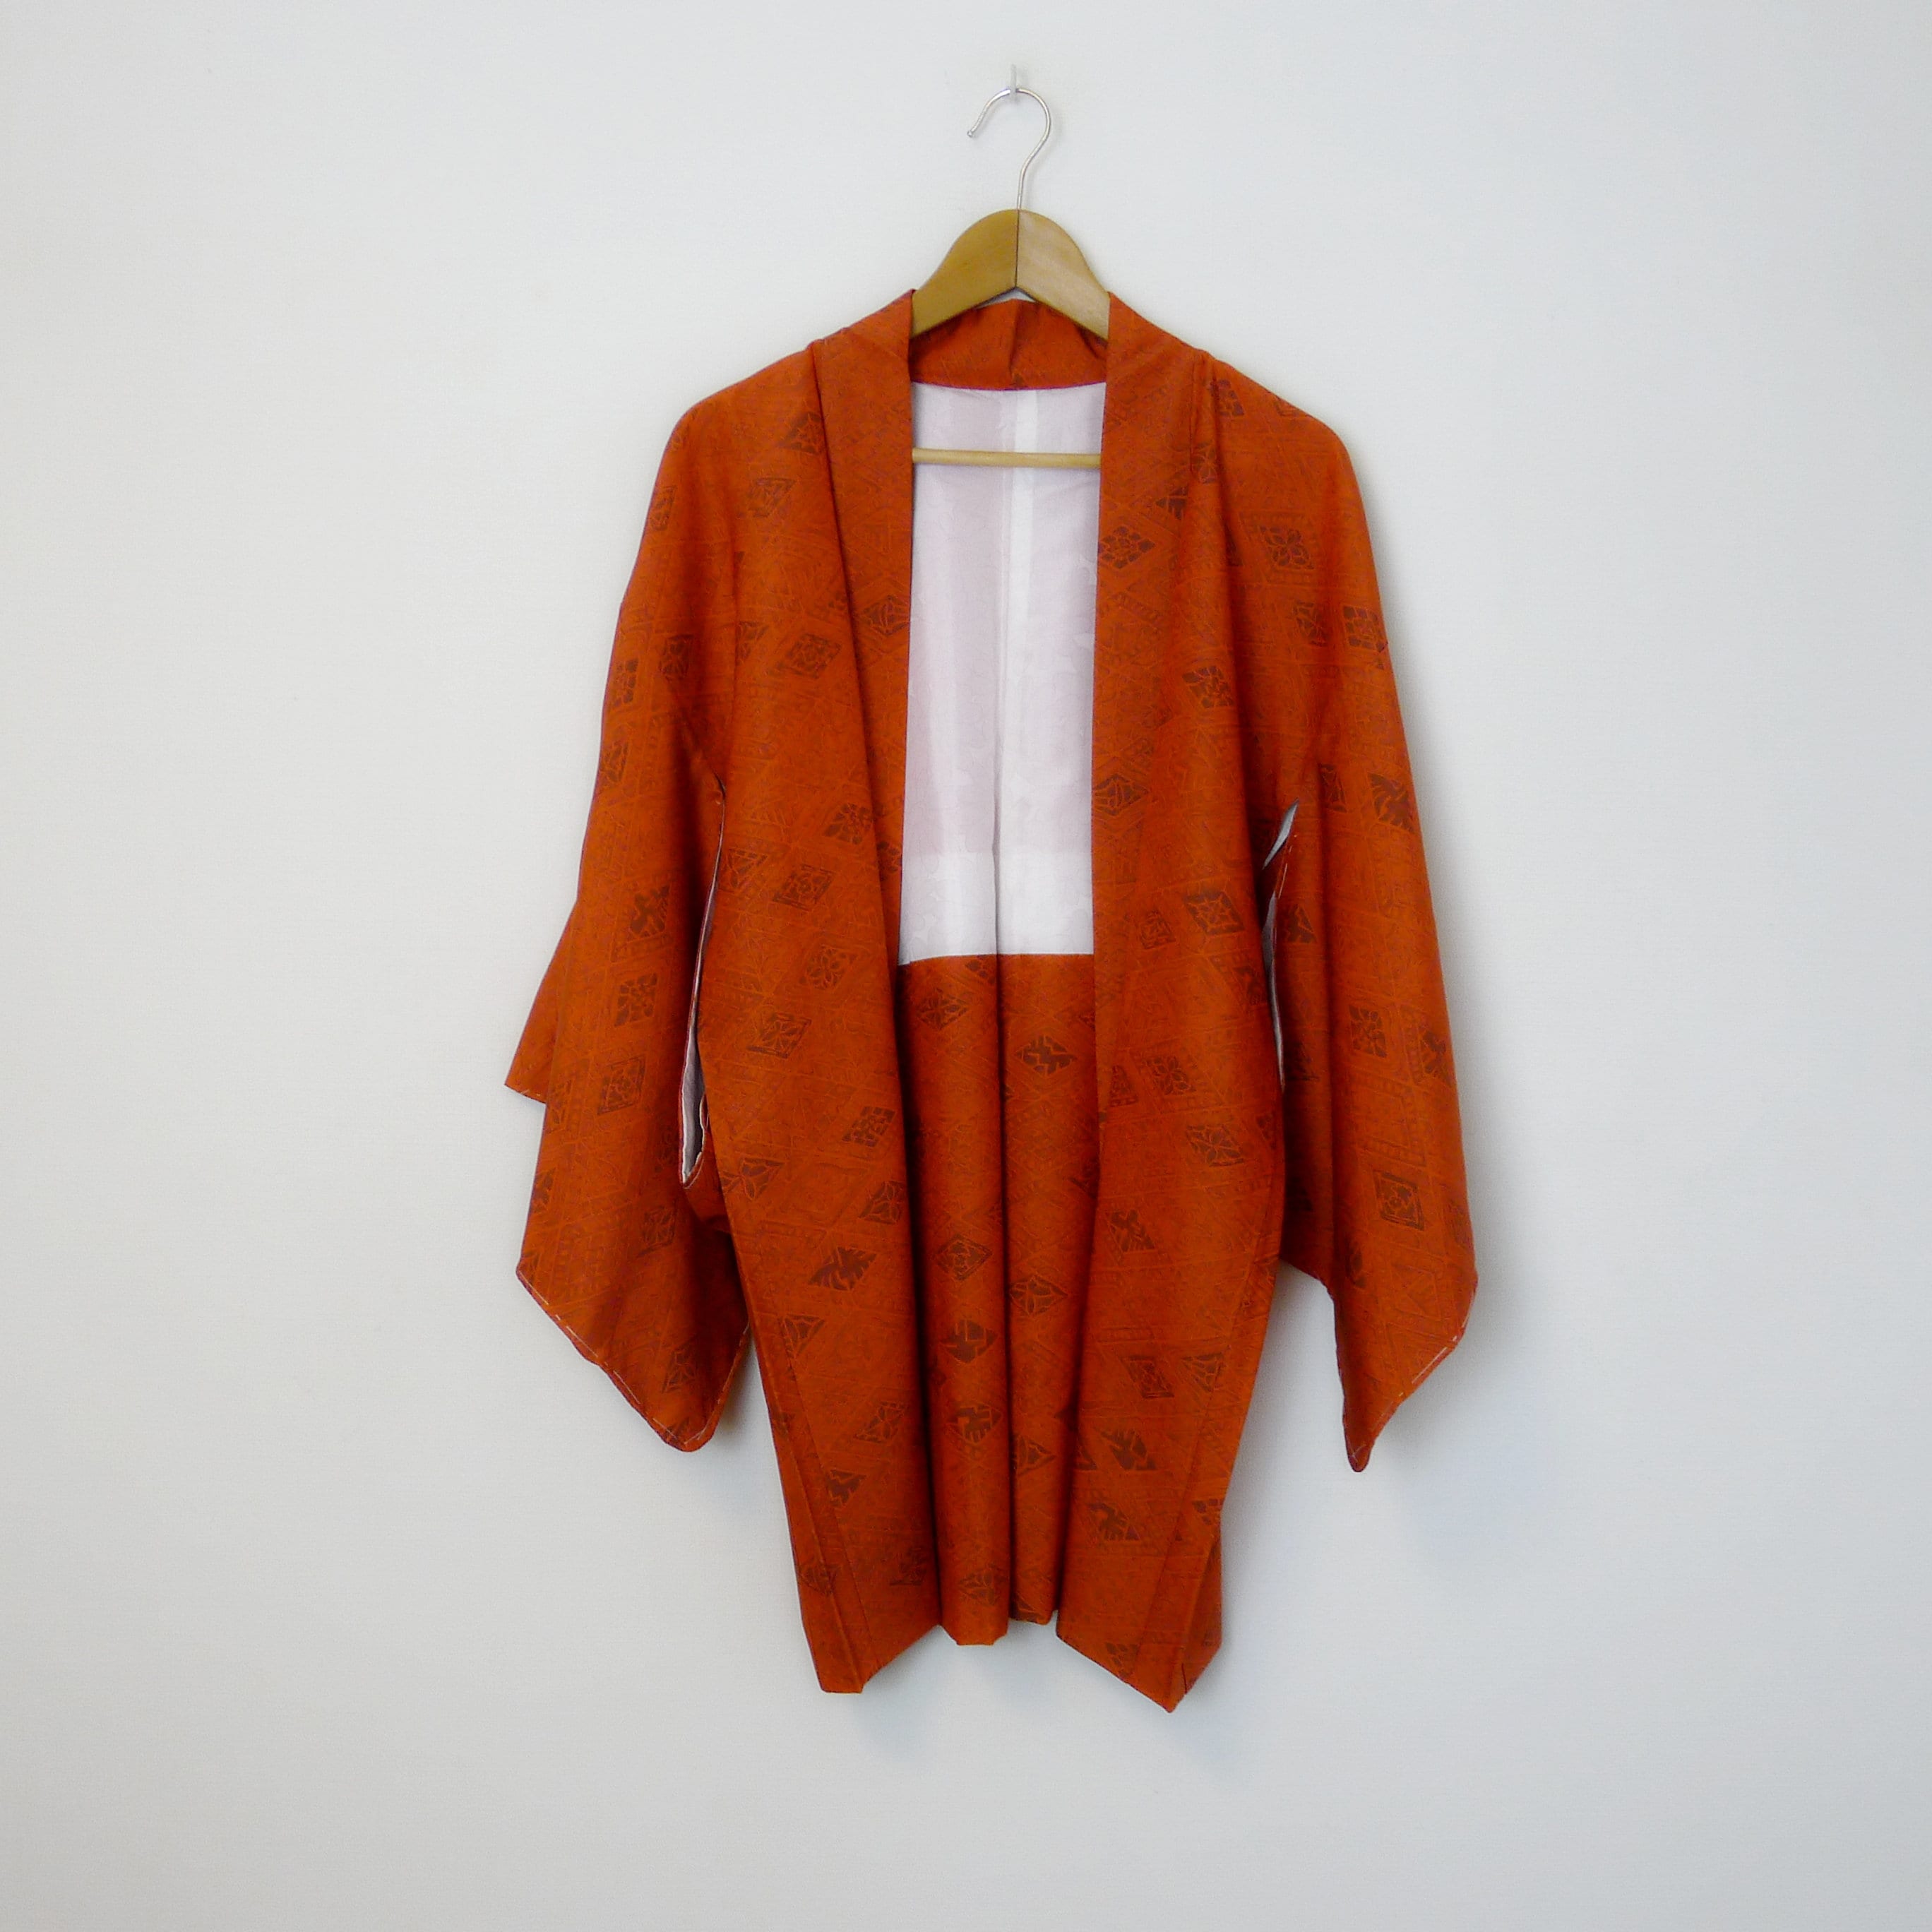 Fire orange haori vintage imitation Kimono jacket in | Etsy